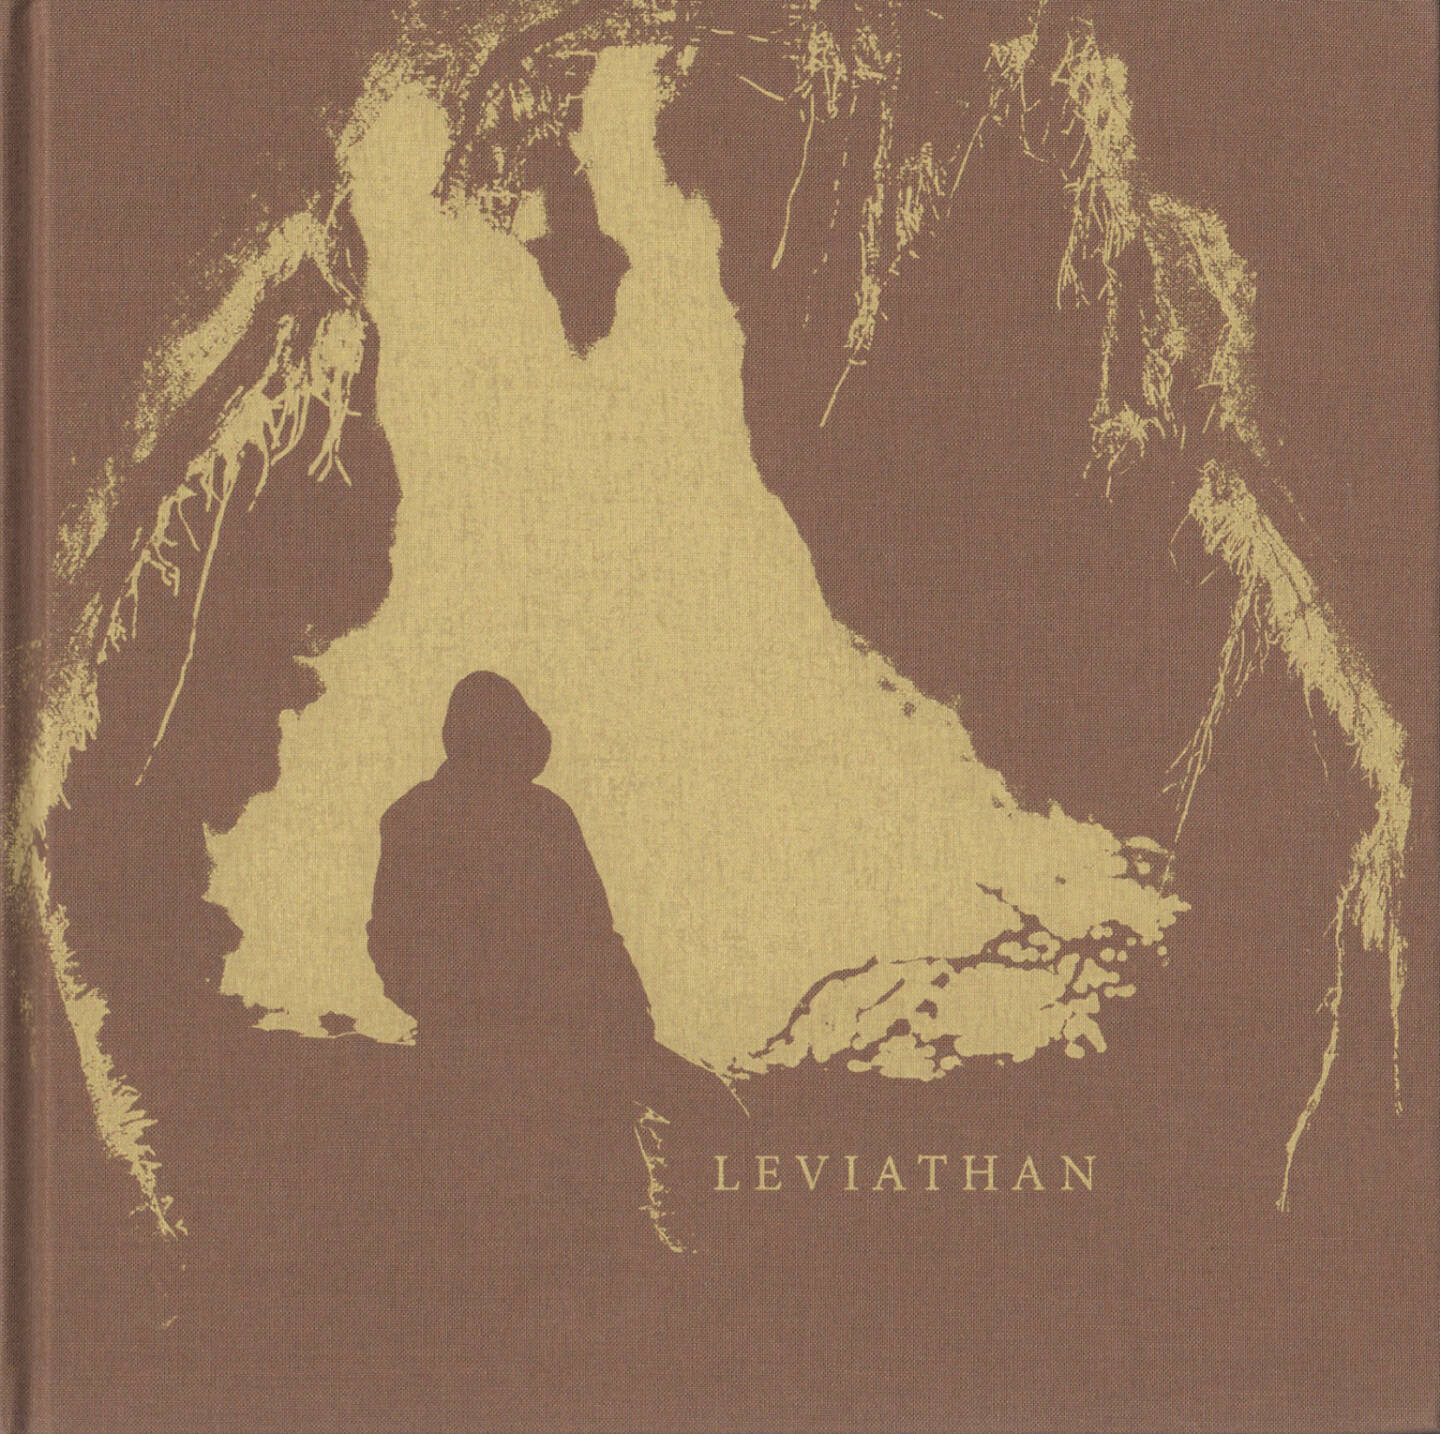 Morgan Ashcom - Leviathan, Peperoni Books 2015, Cover - http://josefchladek.com/book/morgan_ashcom_-_leviathan